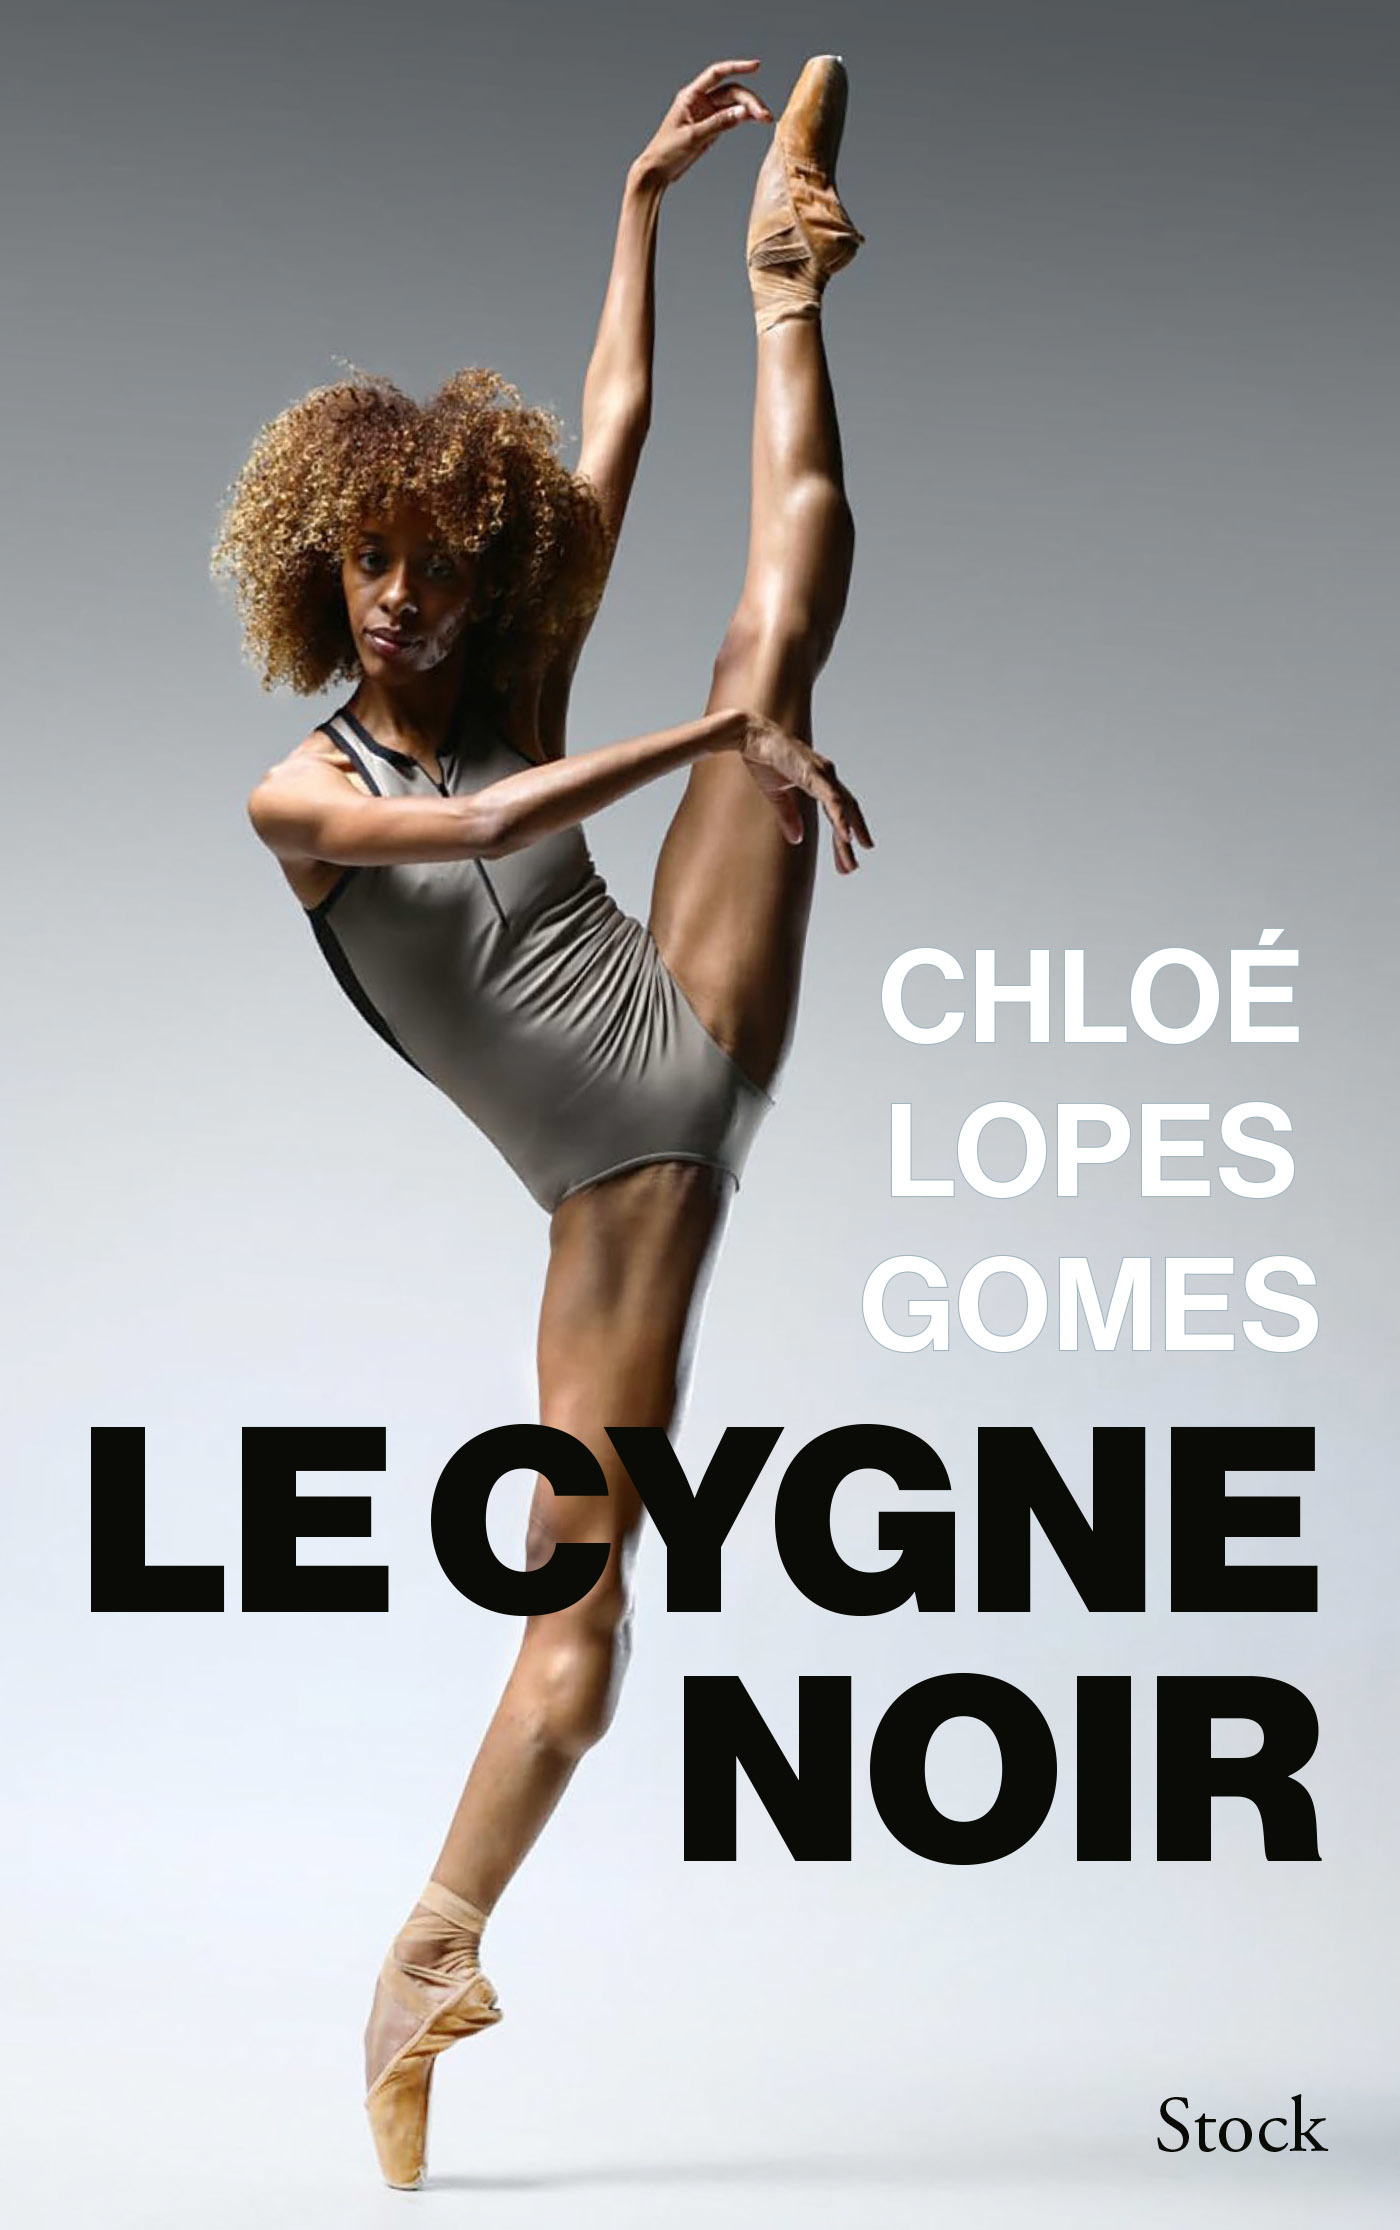 Le Cygne noir Chloé Lopes Gomes // Source : Chloé Lopes Gomes / Stock